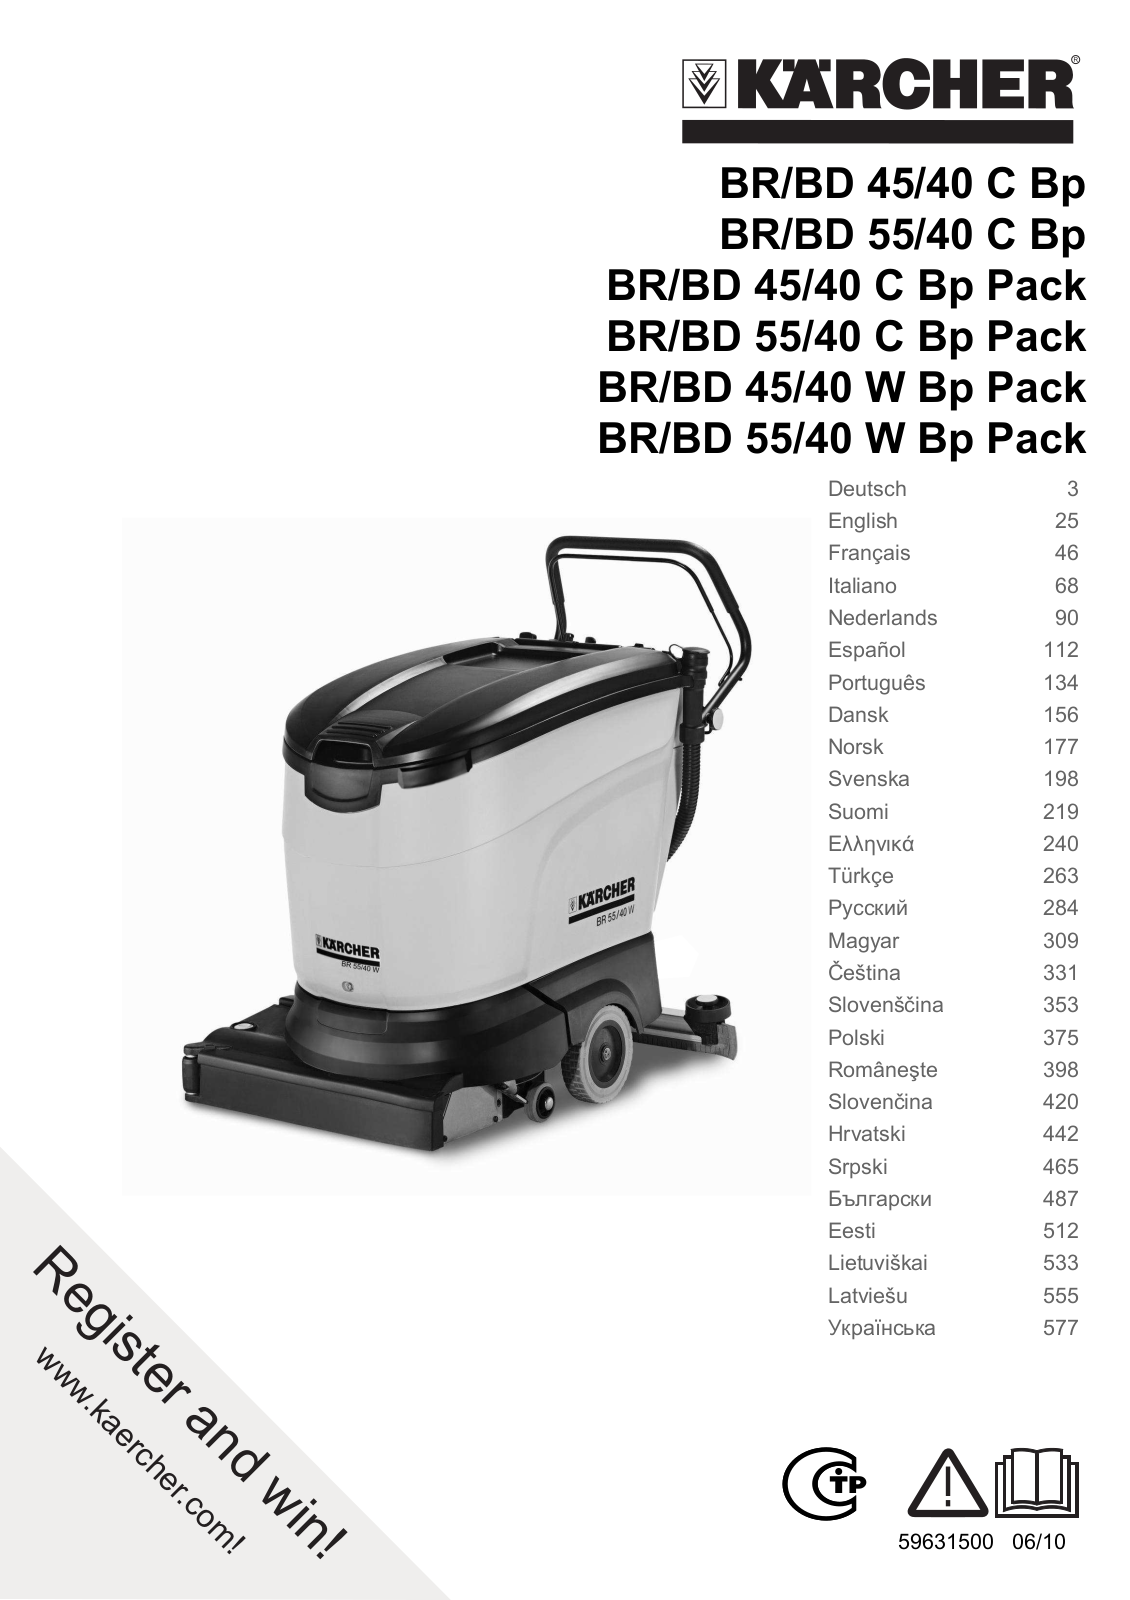 Karcher BD 55/40 C Bp Pack DOSE User Manual